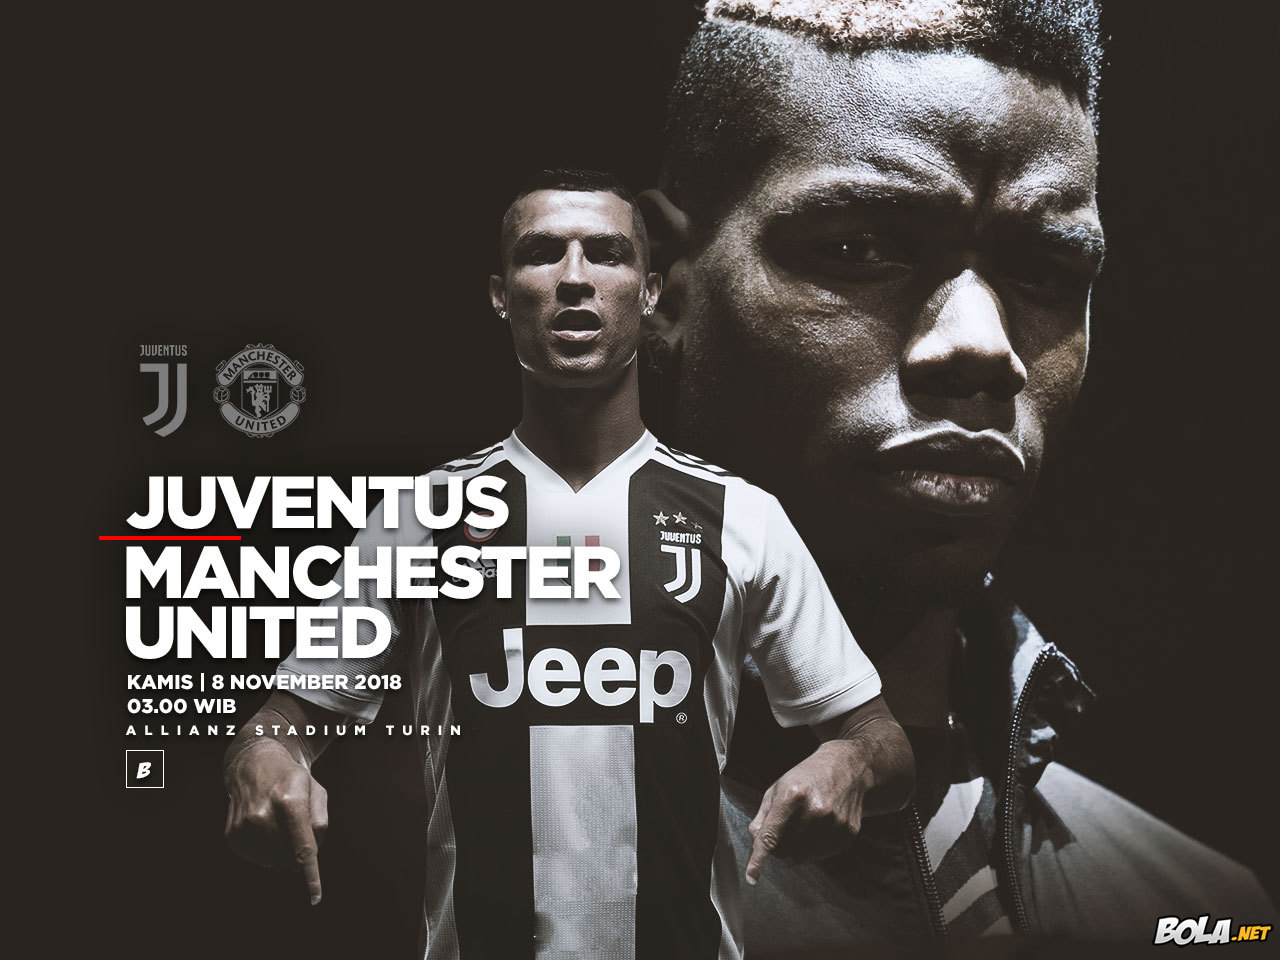 Deskripsi : Wallpaper Juventus Vs Manchester United, size: 1280x960